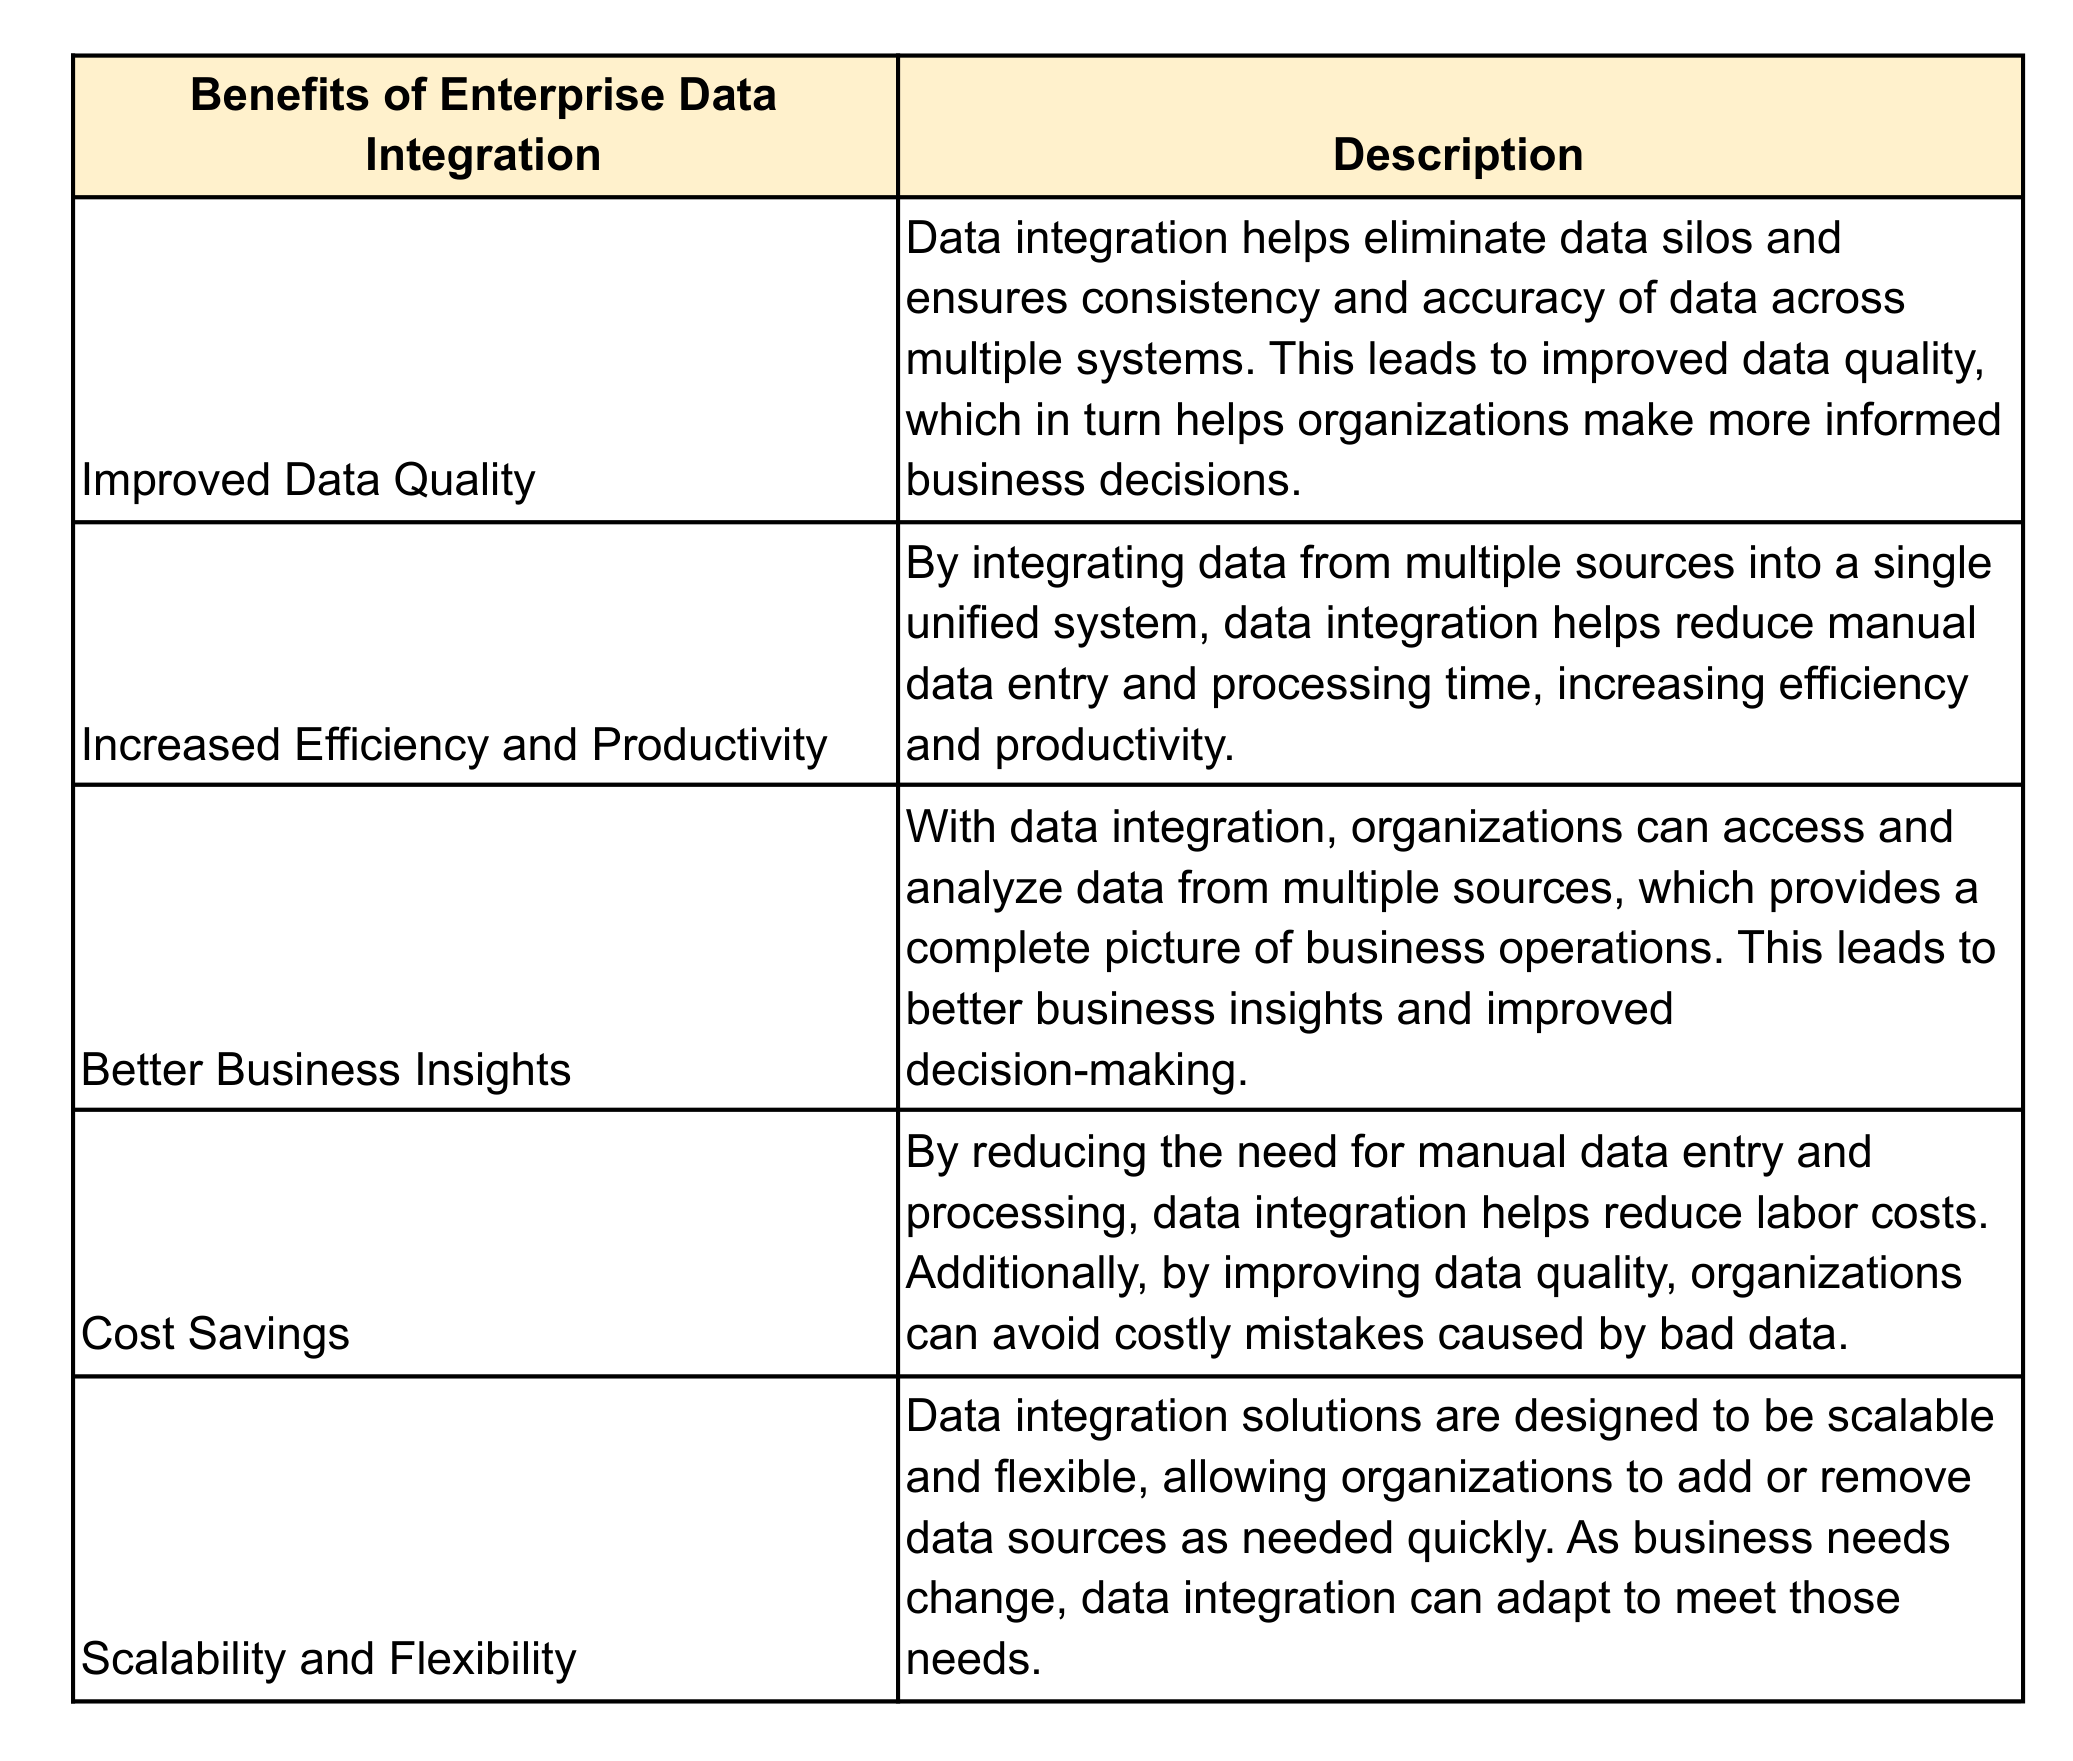 Benefits of data integration